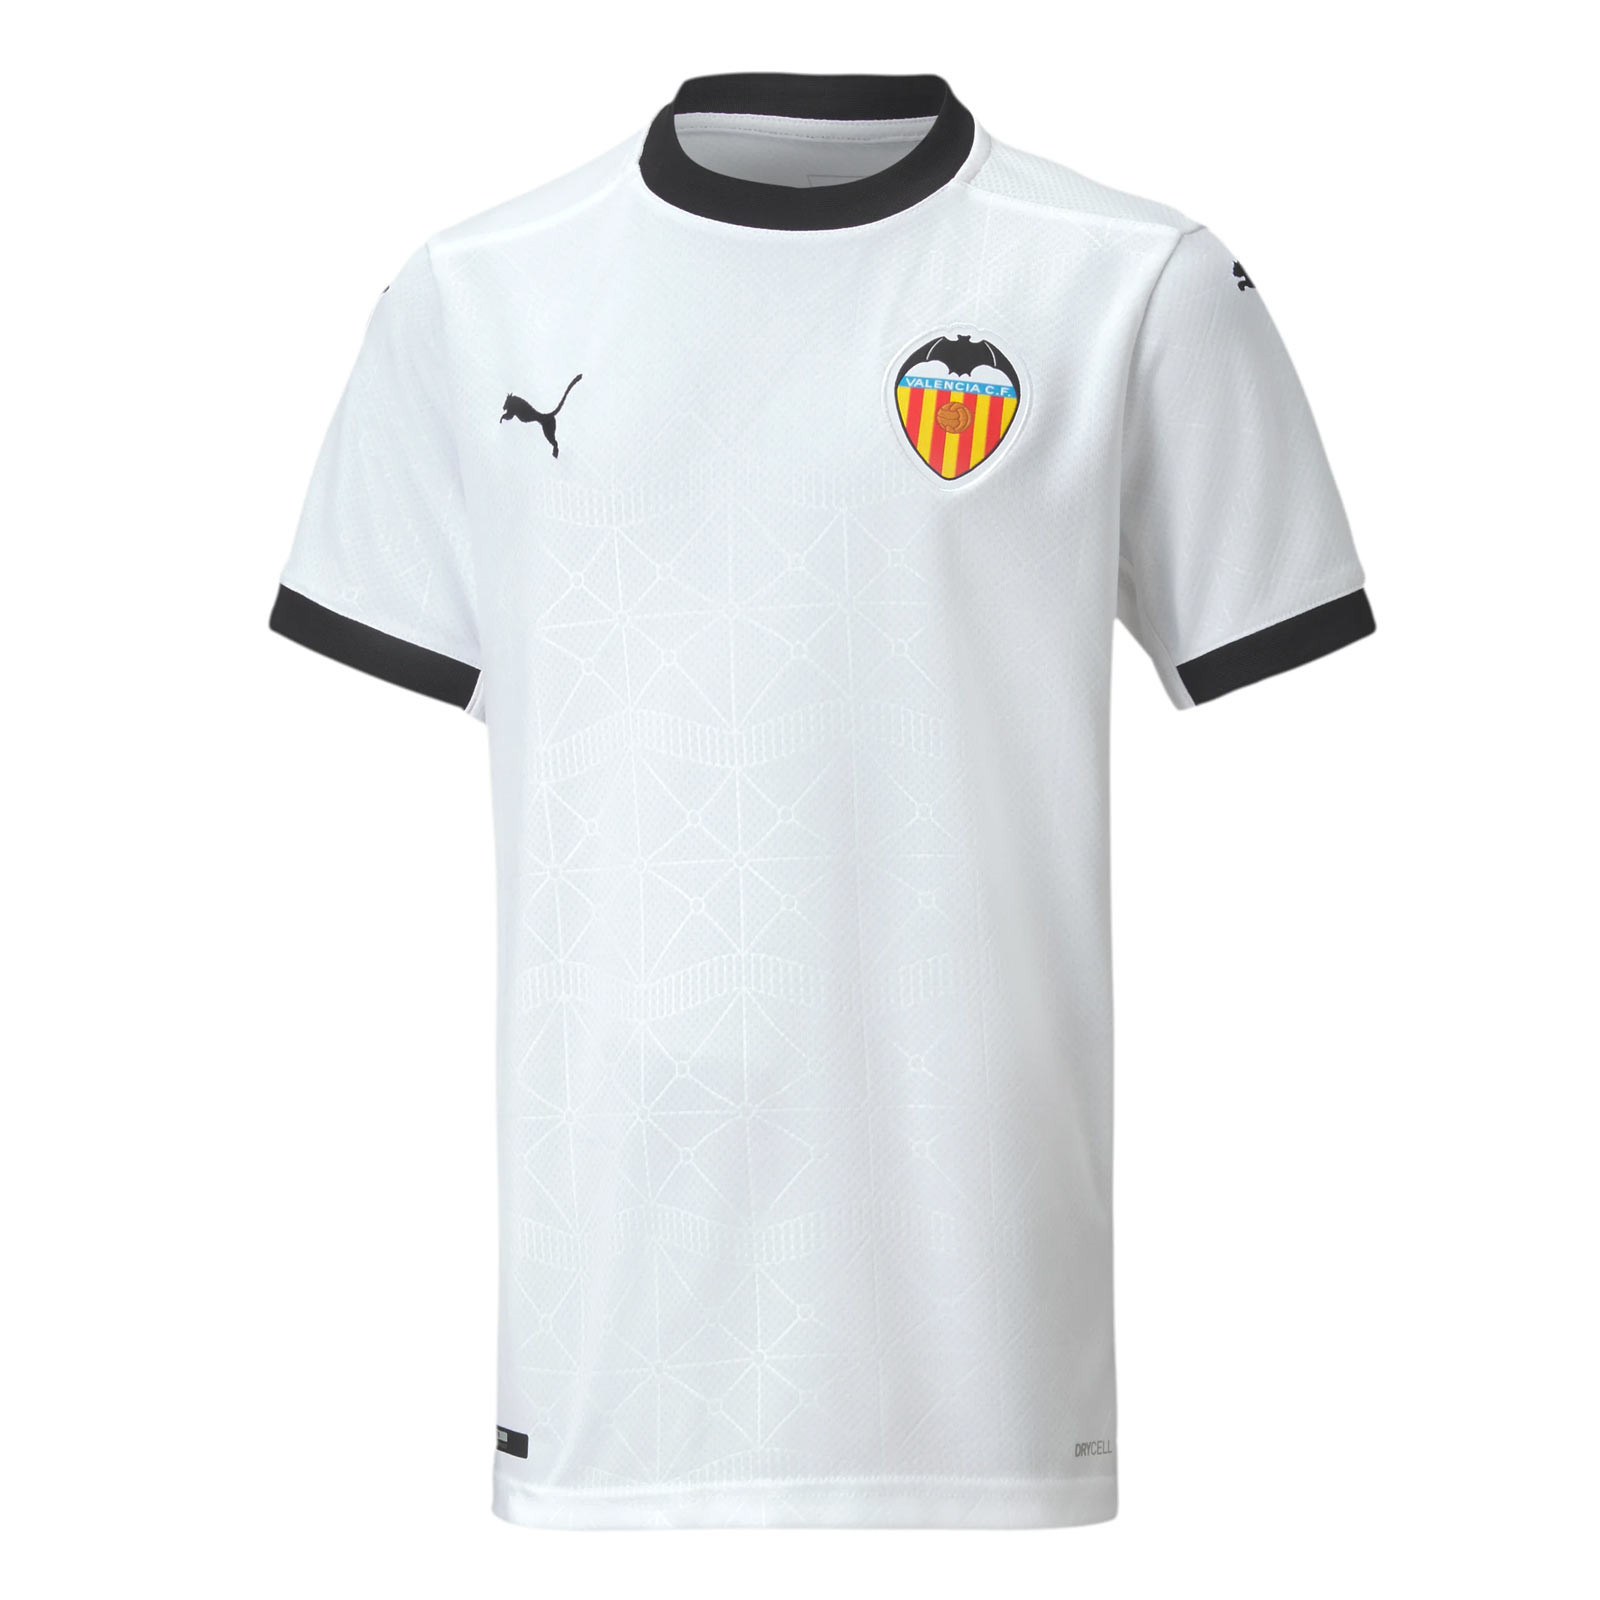 Valencia niño 2020 2021 futbolmaniaKids